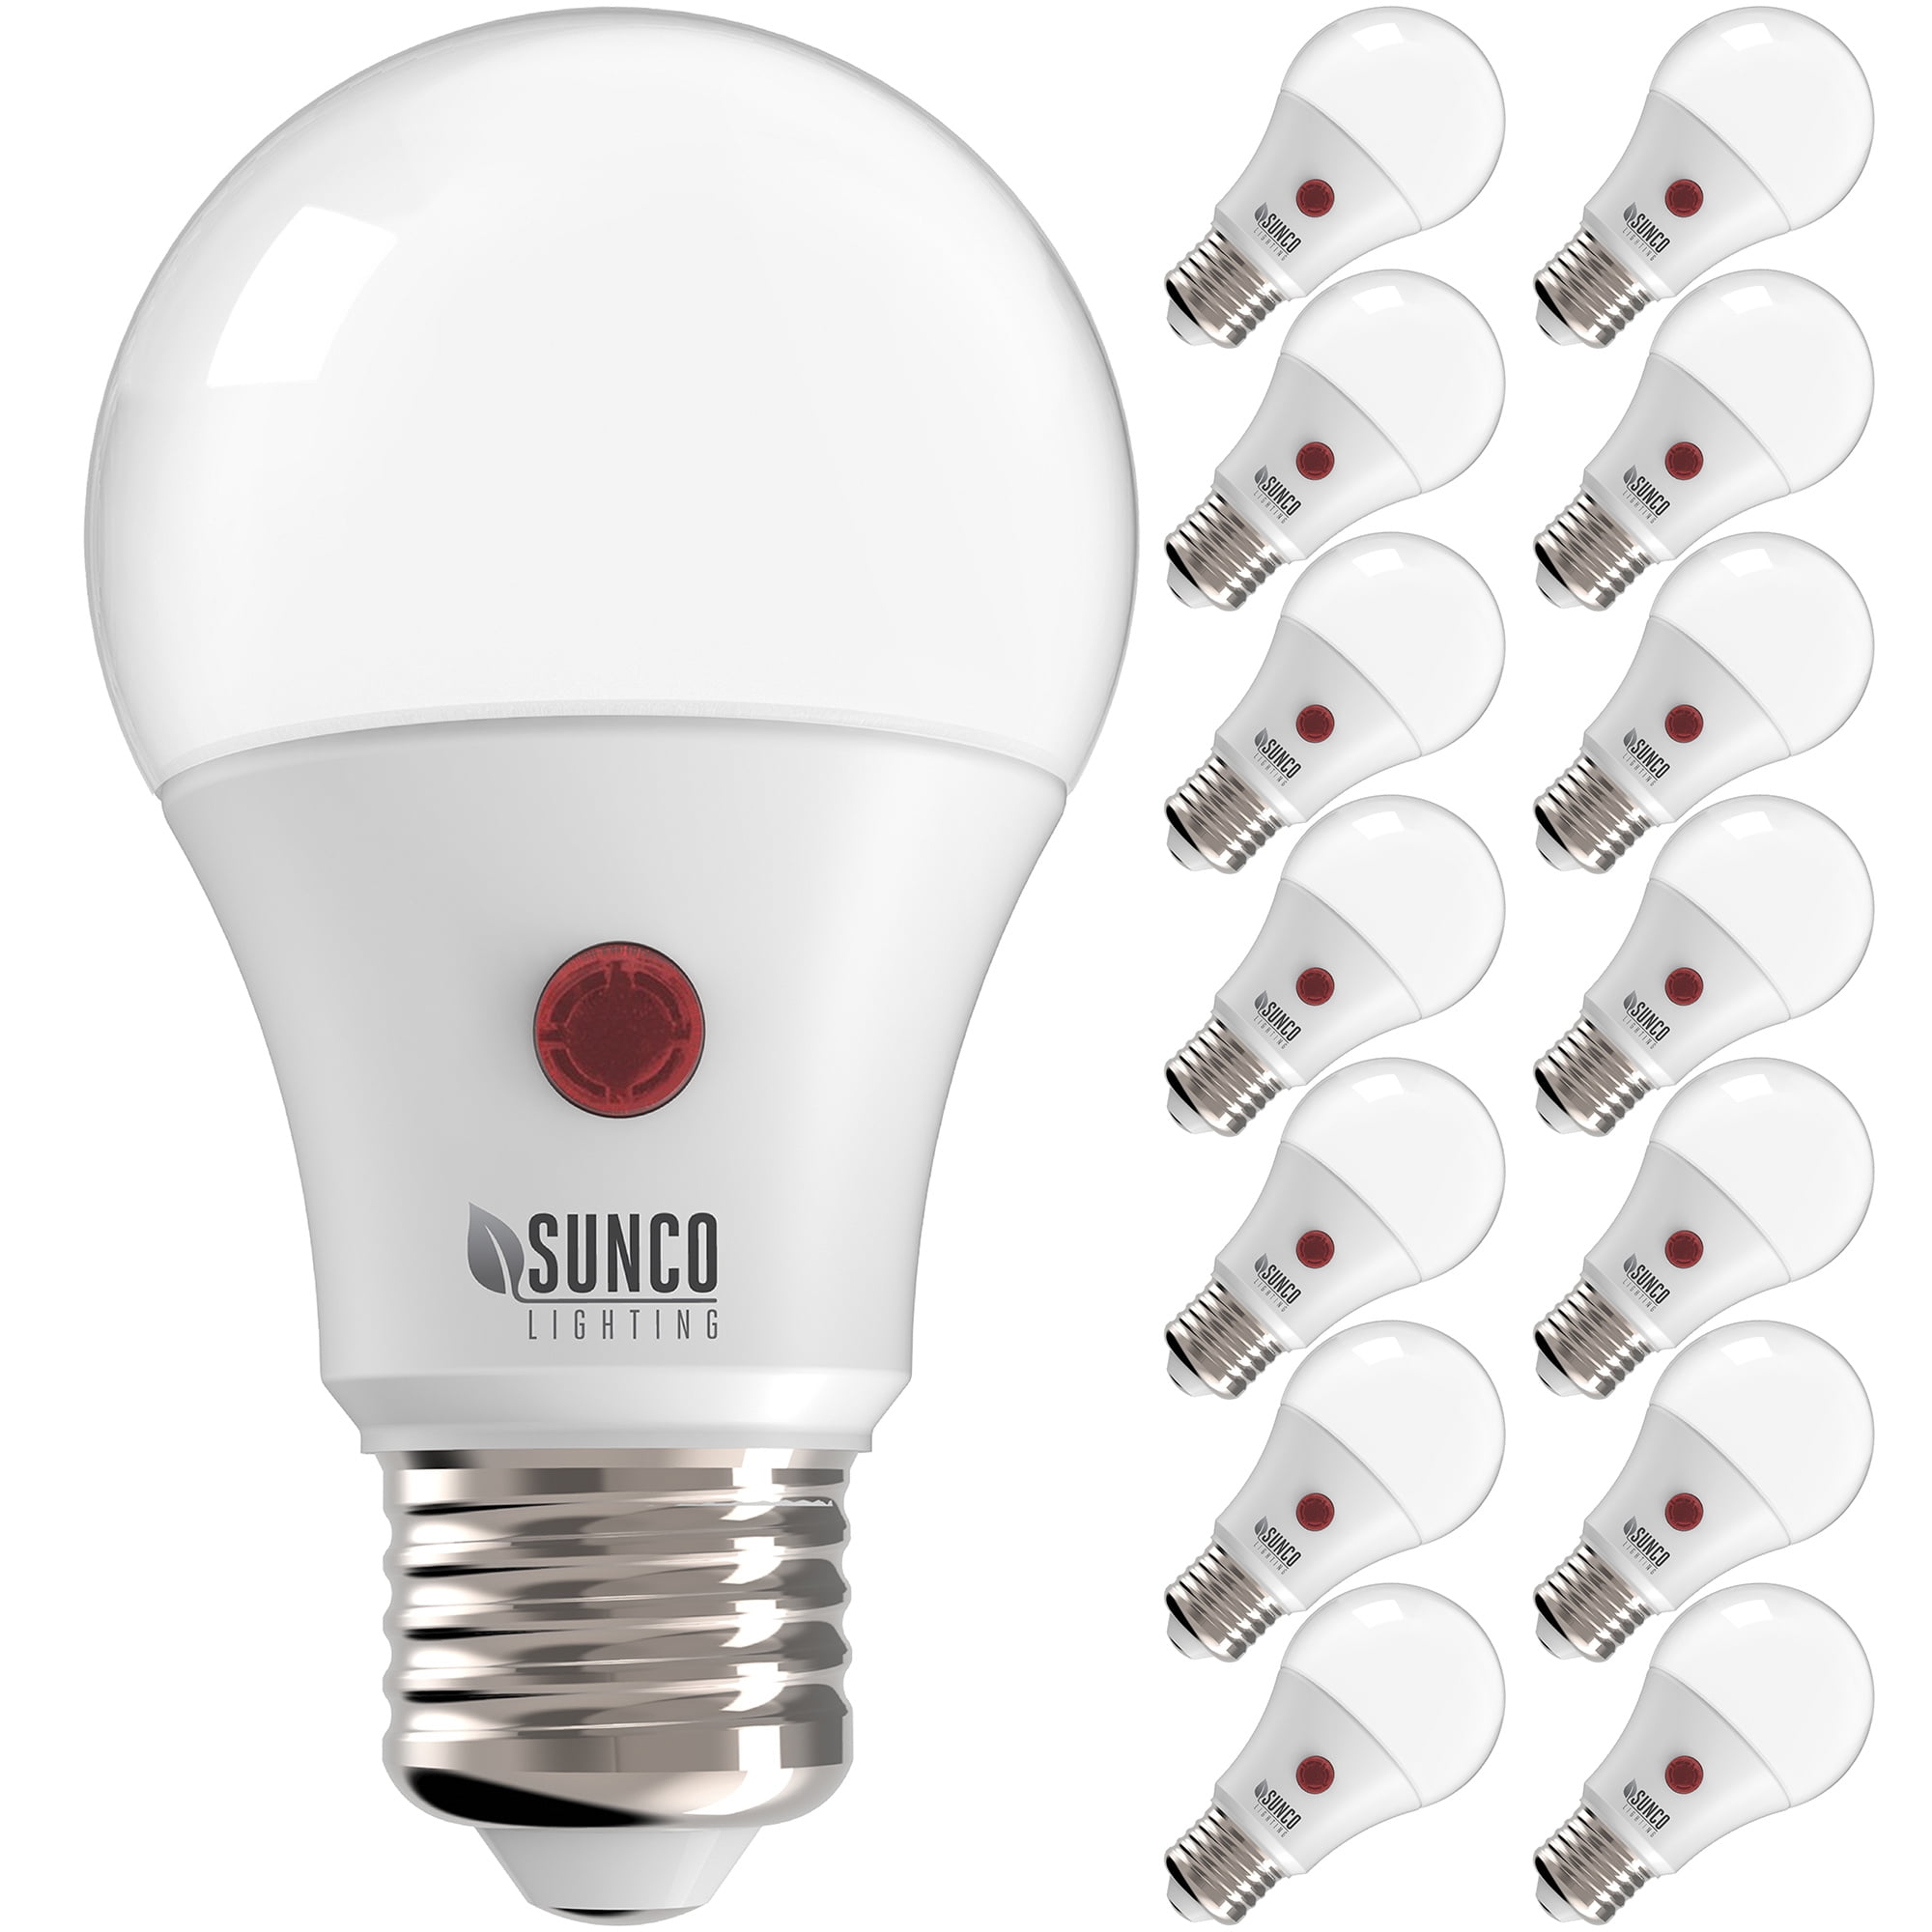 Sunco A19 LED Bulb 9W=60W 2700K Soft White Auto On/Off 632030027575 Dusk to Dawn 